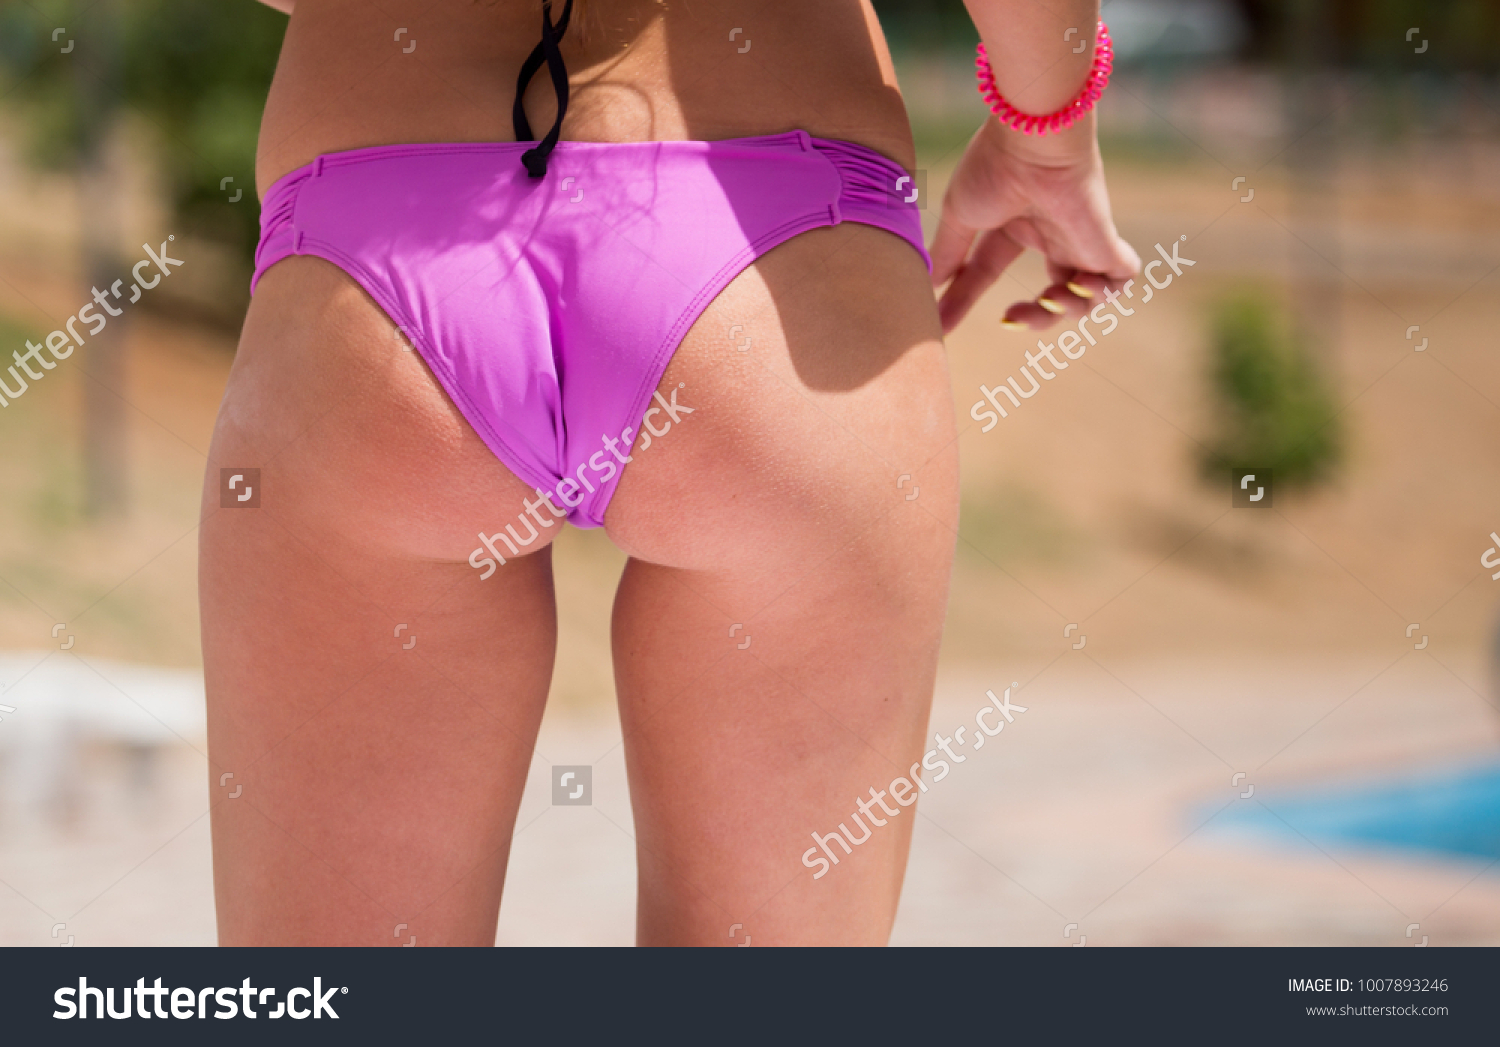 Bikini Ass Pictures